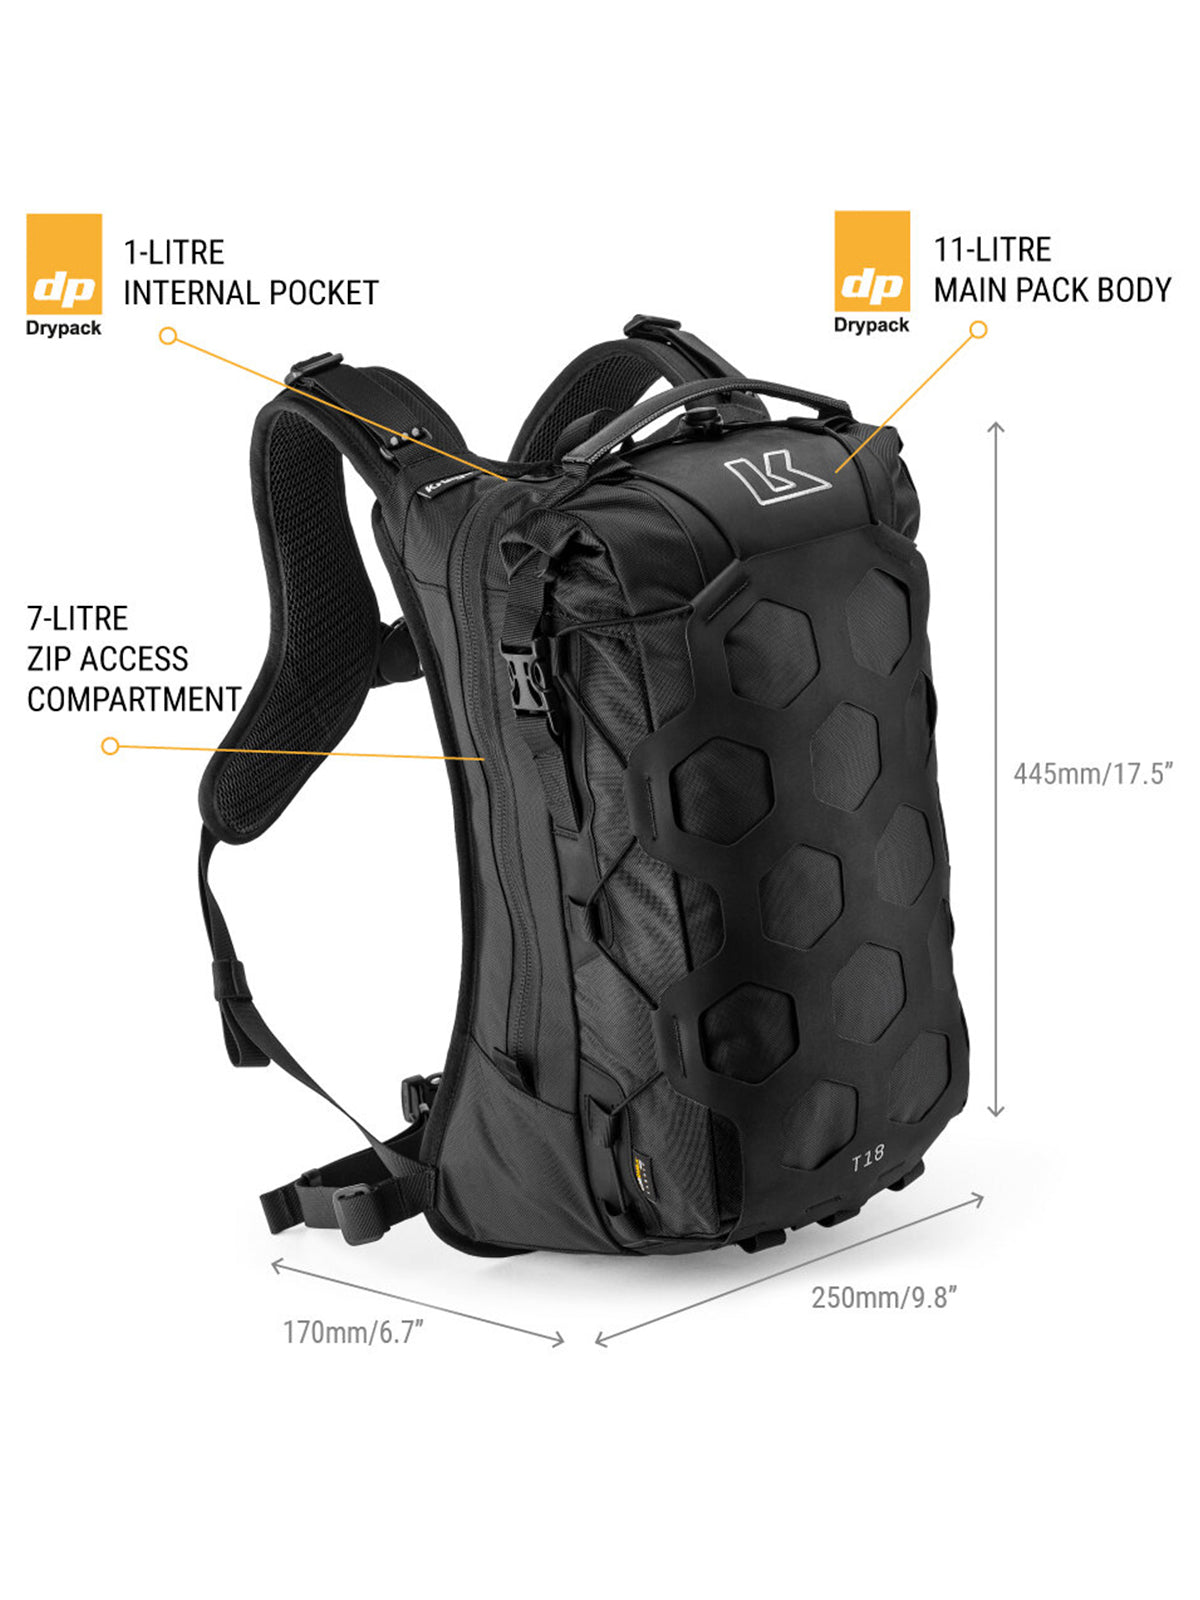 Kriega Trail18 Adventure Backpack dimensions